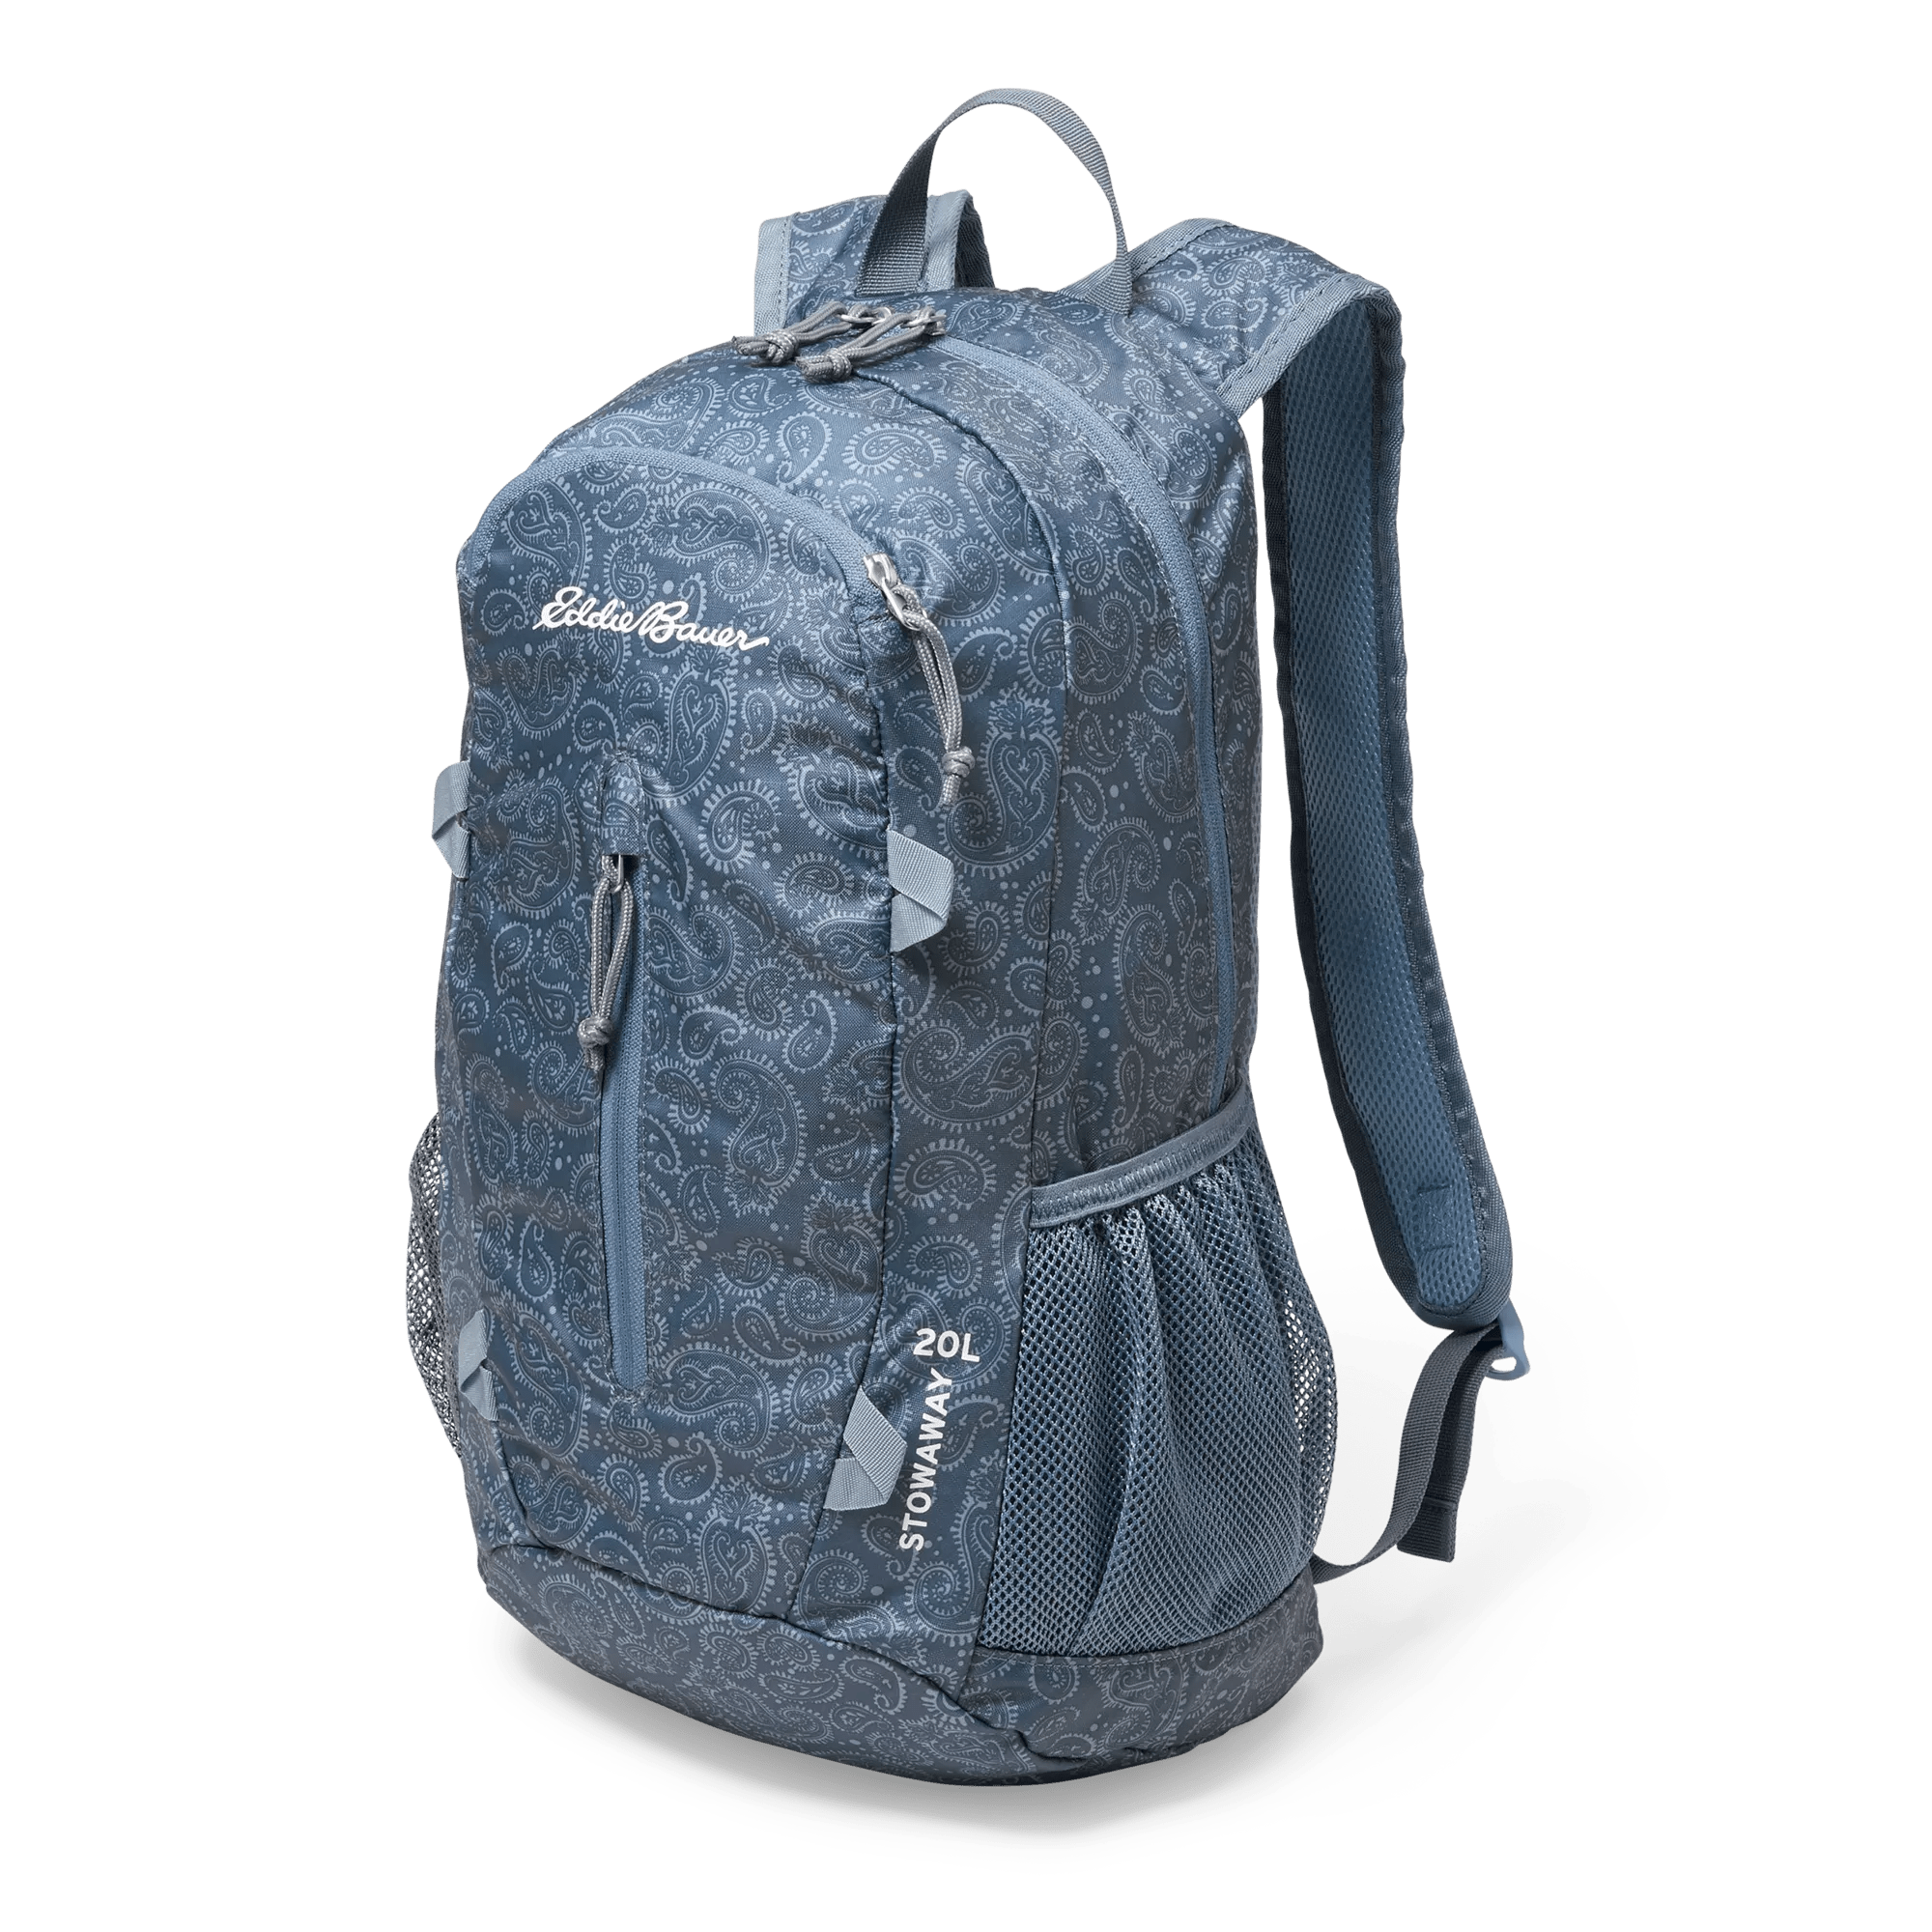 Stowaway Packable 20L Daypack Backpack - Plus